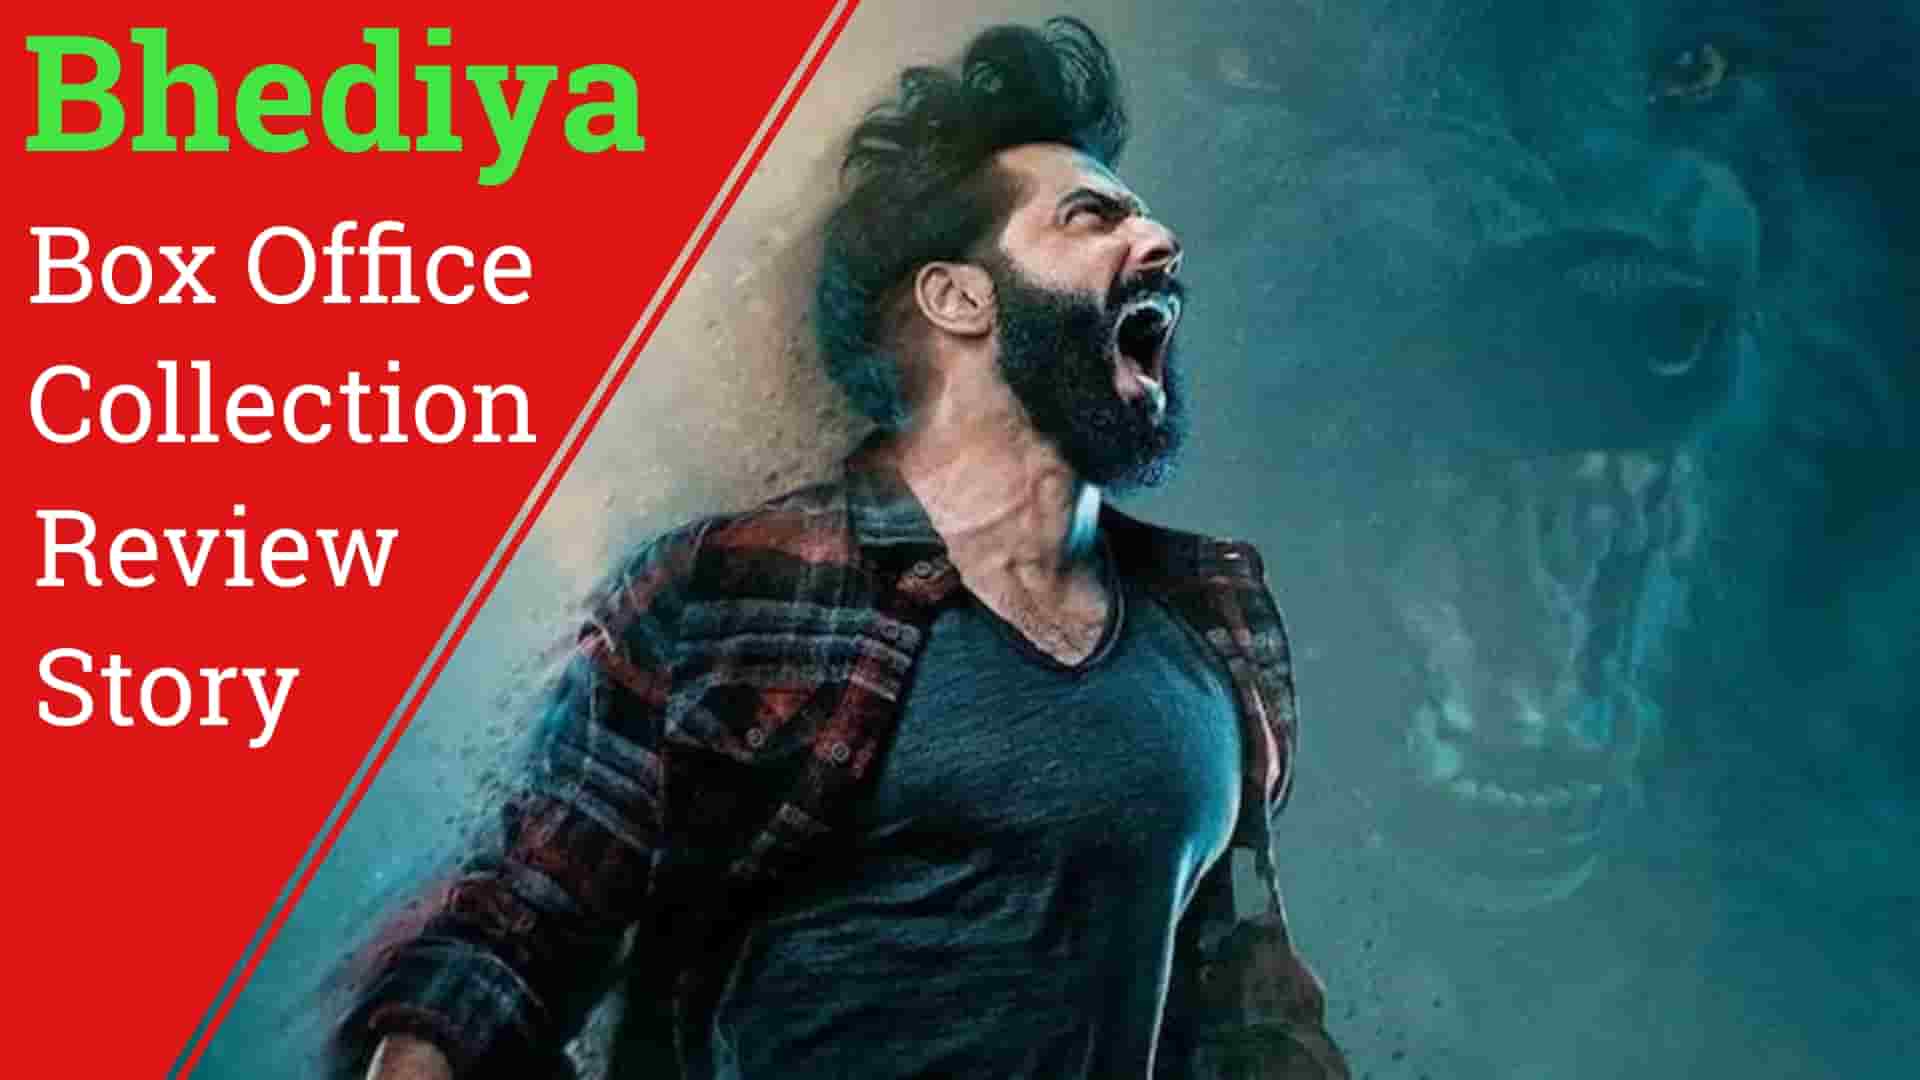 Bhediya Box Office Collection Story and Review